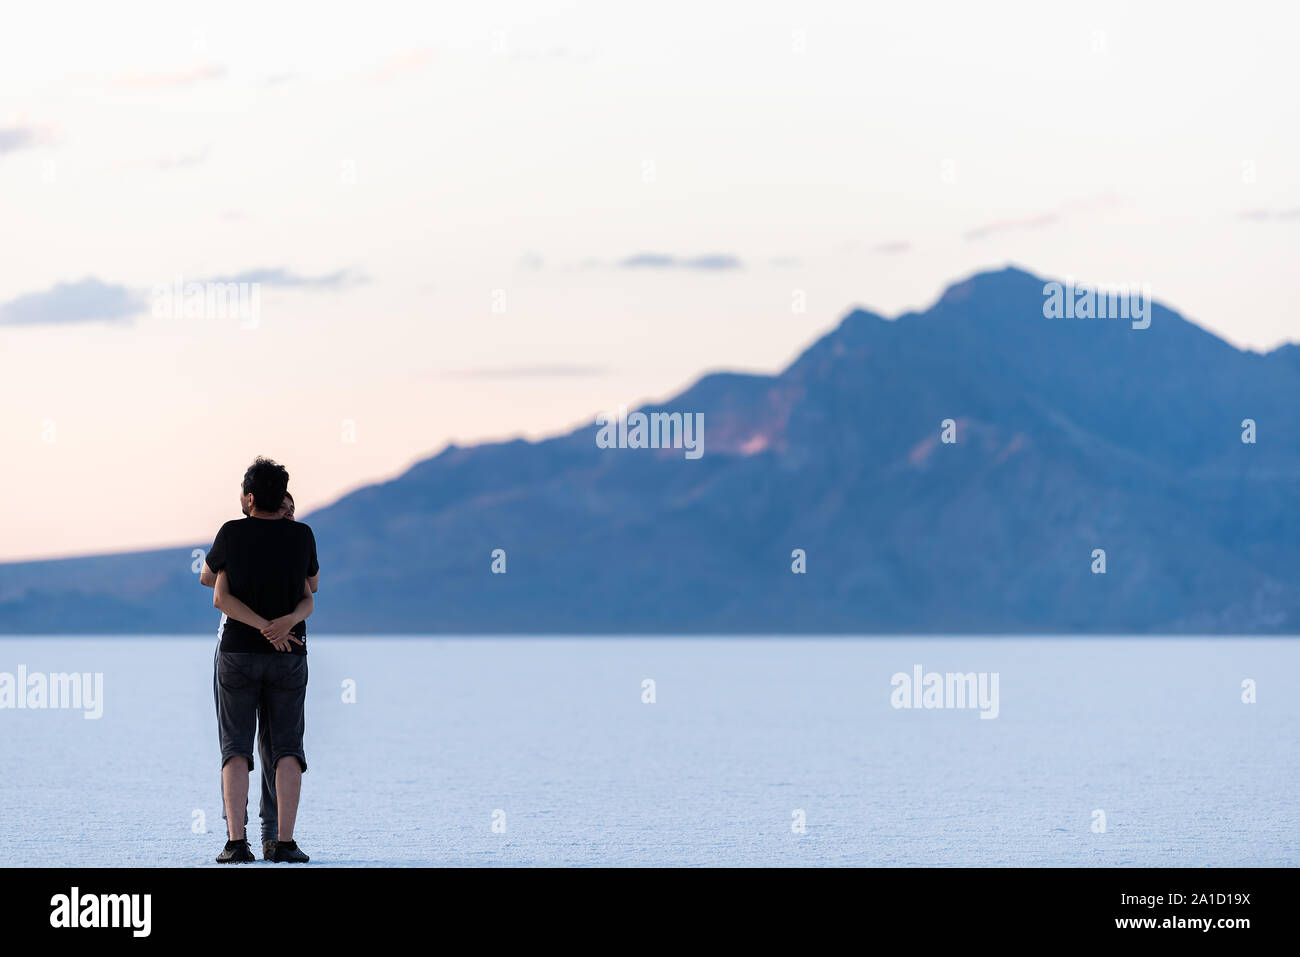 Wendover, USA - July 27, 2019: People couple hugging on white Bonneville Salt Flats near Salt Lake City, Utah and silhouette mountain view Stock Photo